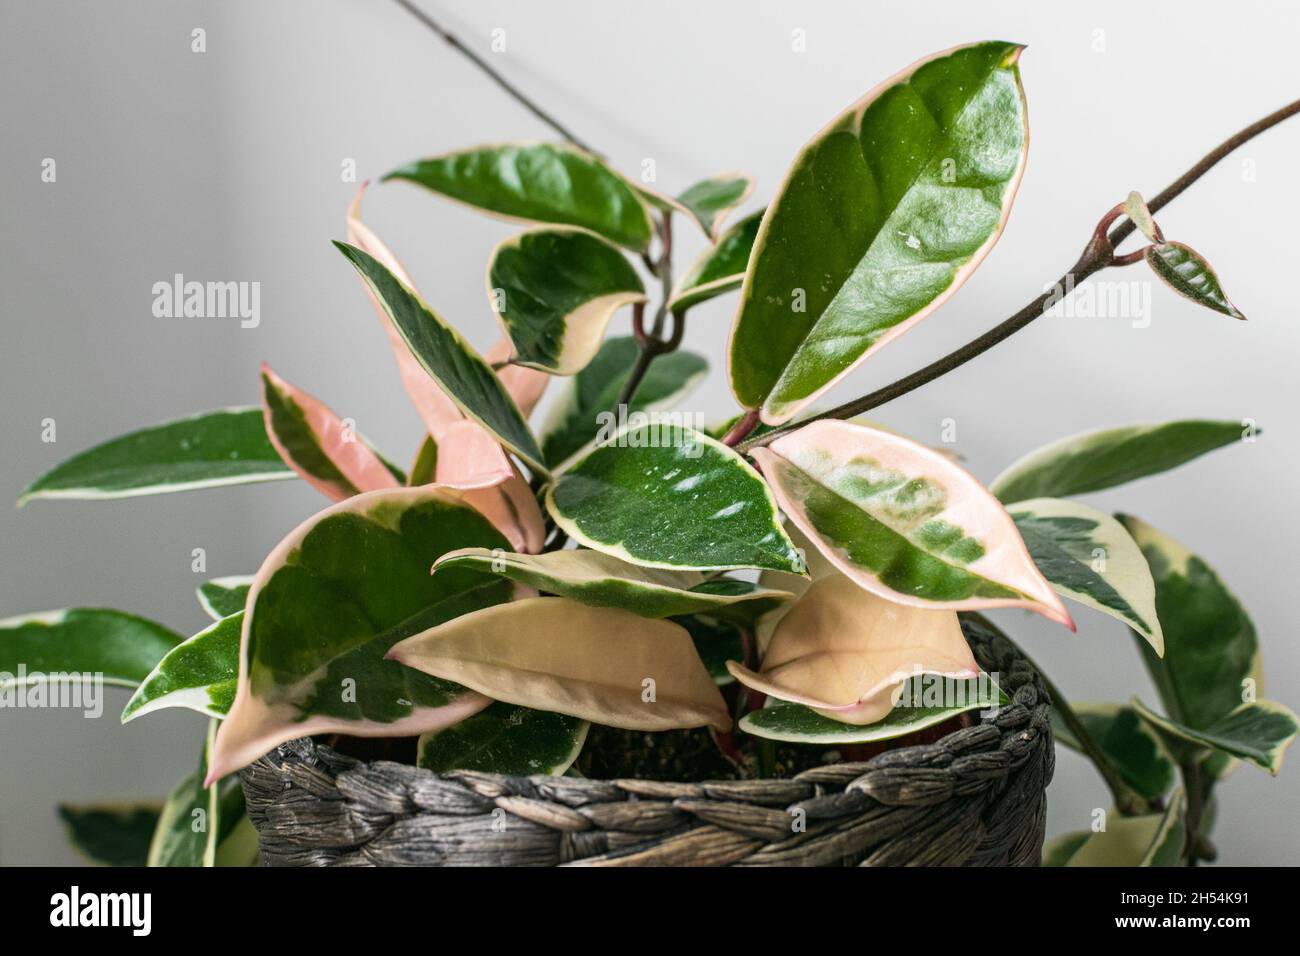 Follaje variegado de hoya carnosa variegata 'Reina Krimson' sobre fondo blanco. Exótico detalle de planta de casa de moda con prominente variegation. Foto de stock